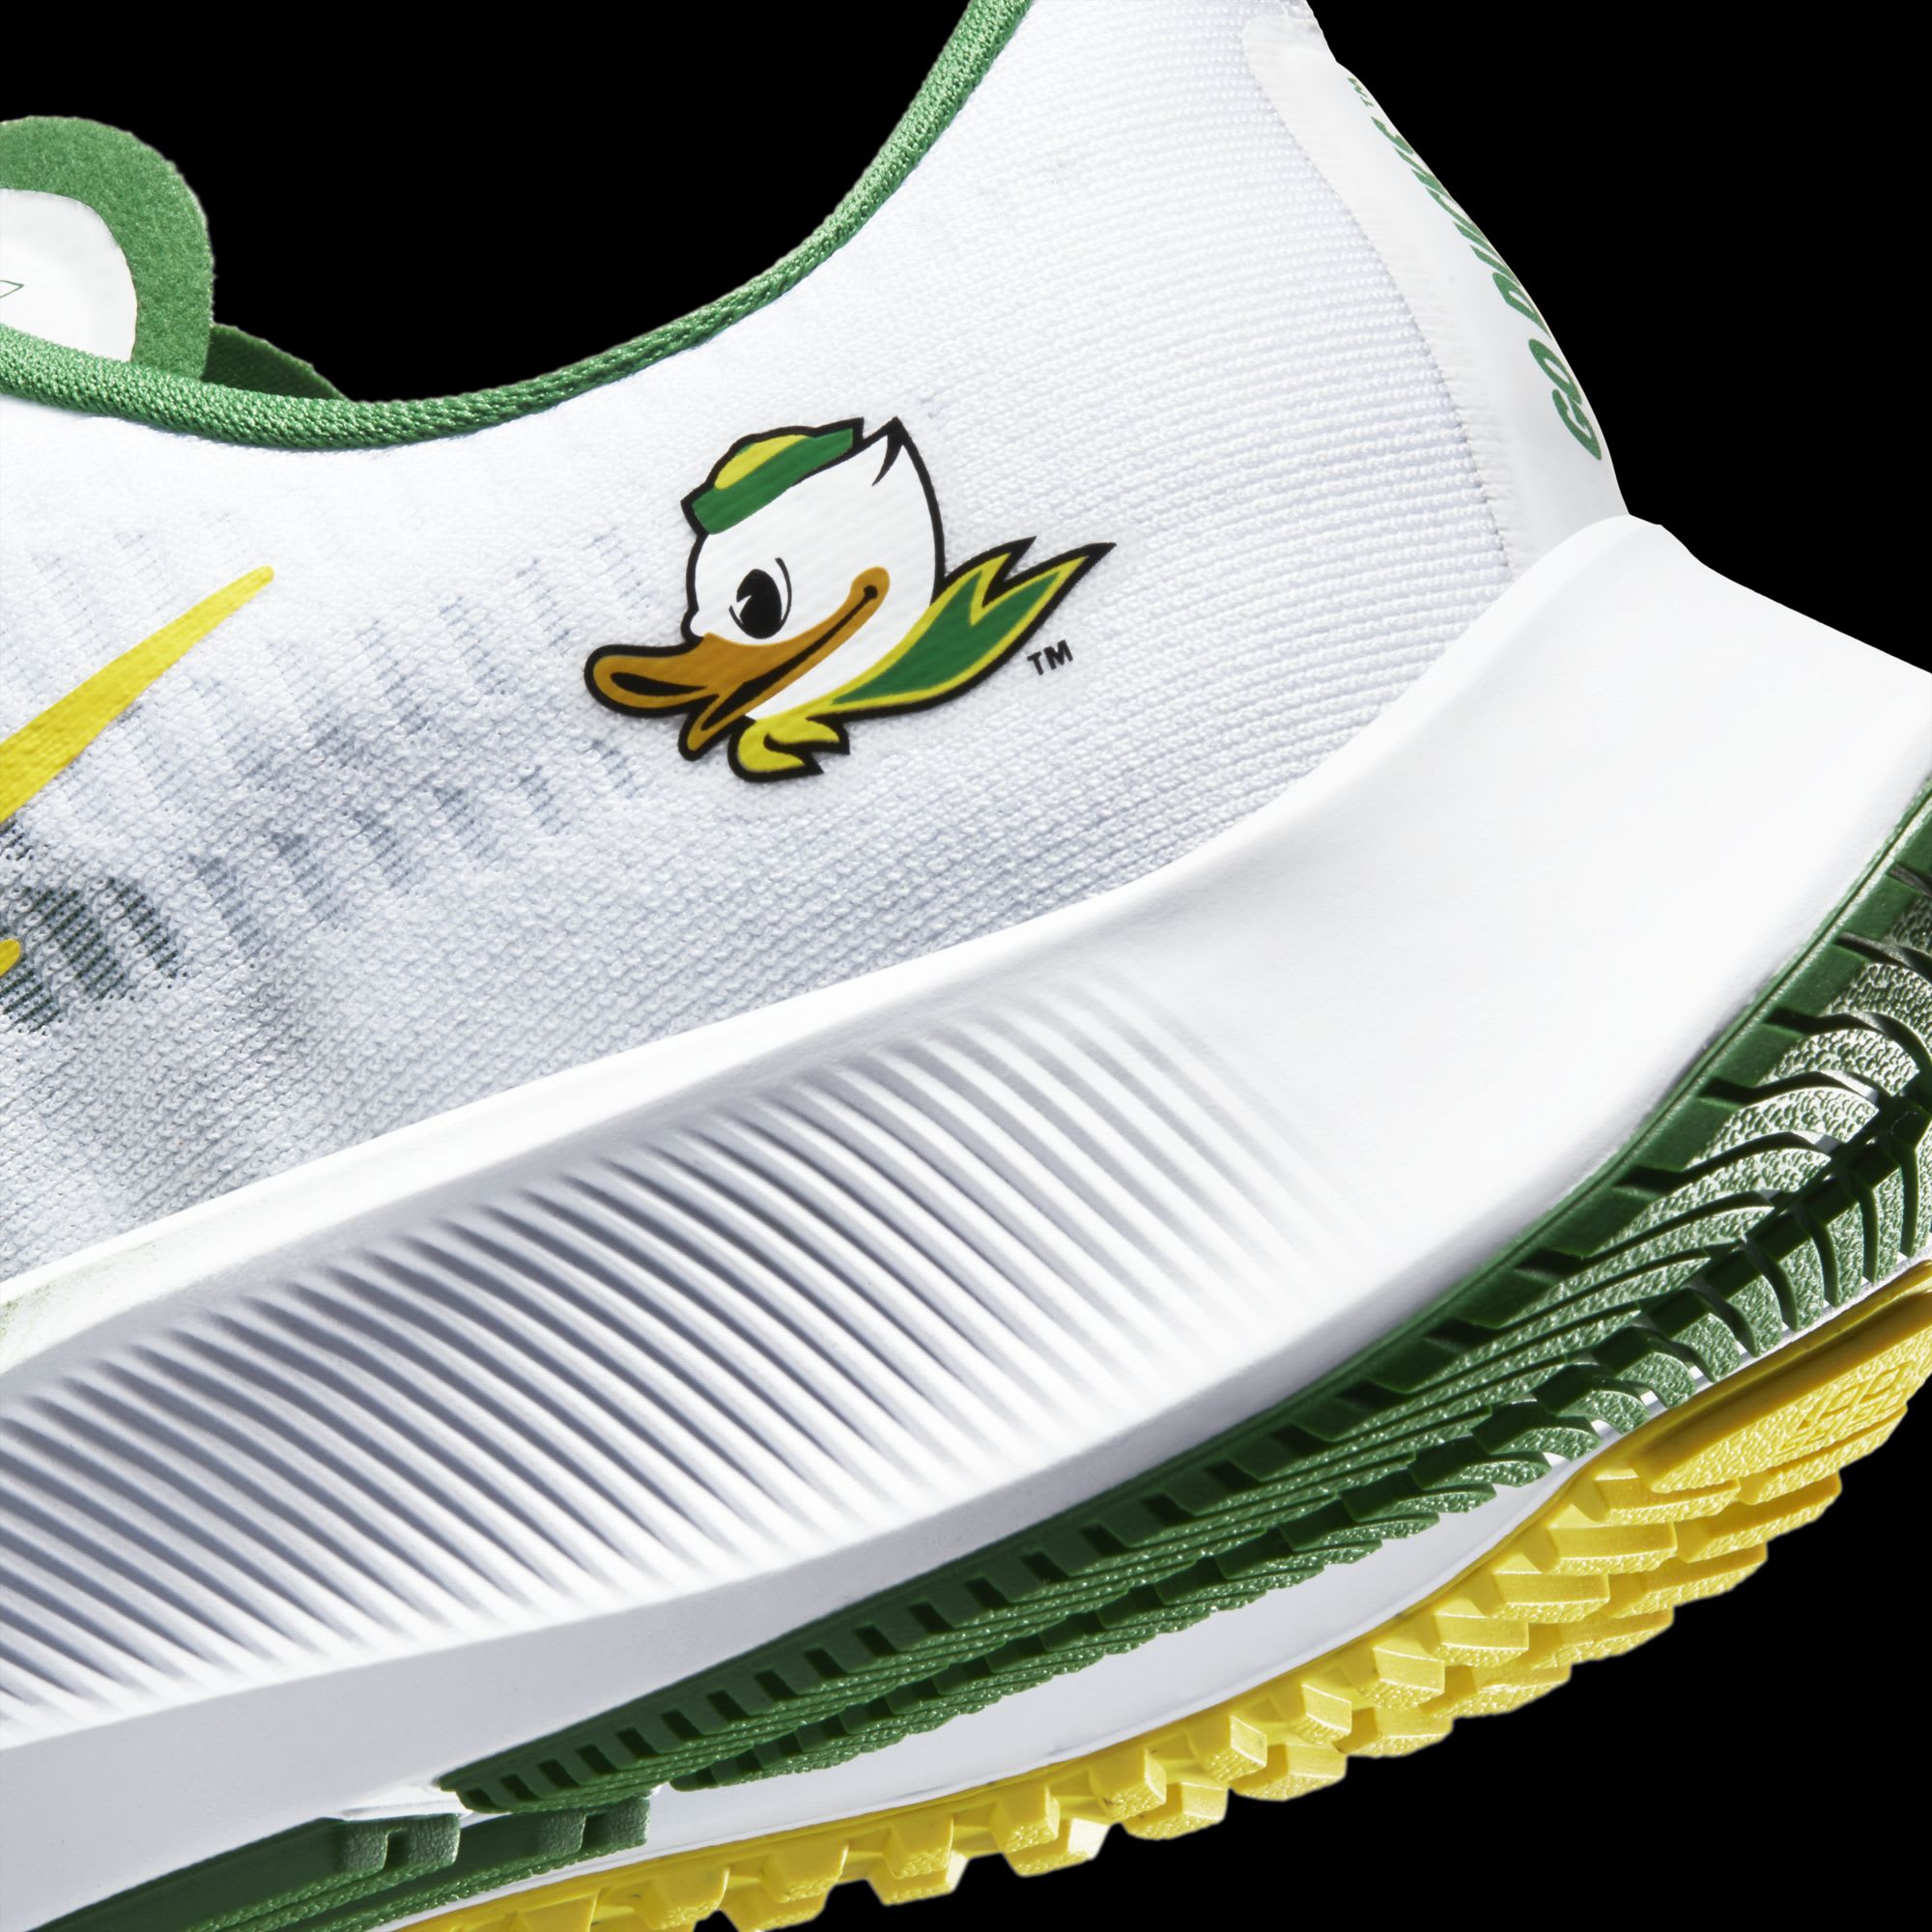 The Nike Air Zoom Pegasus 37 Oregon Ducks just dropped